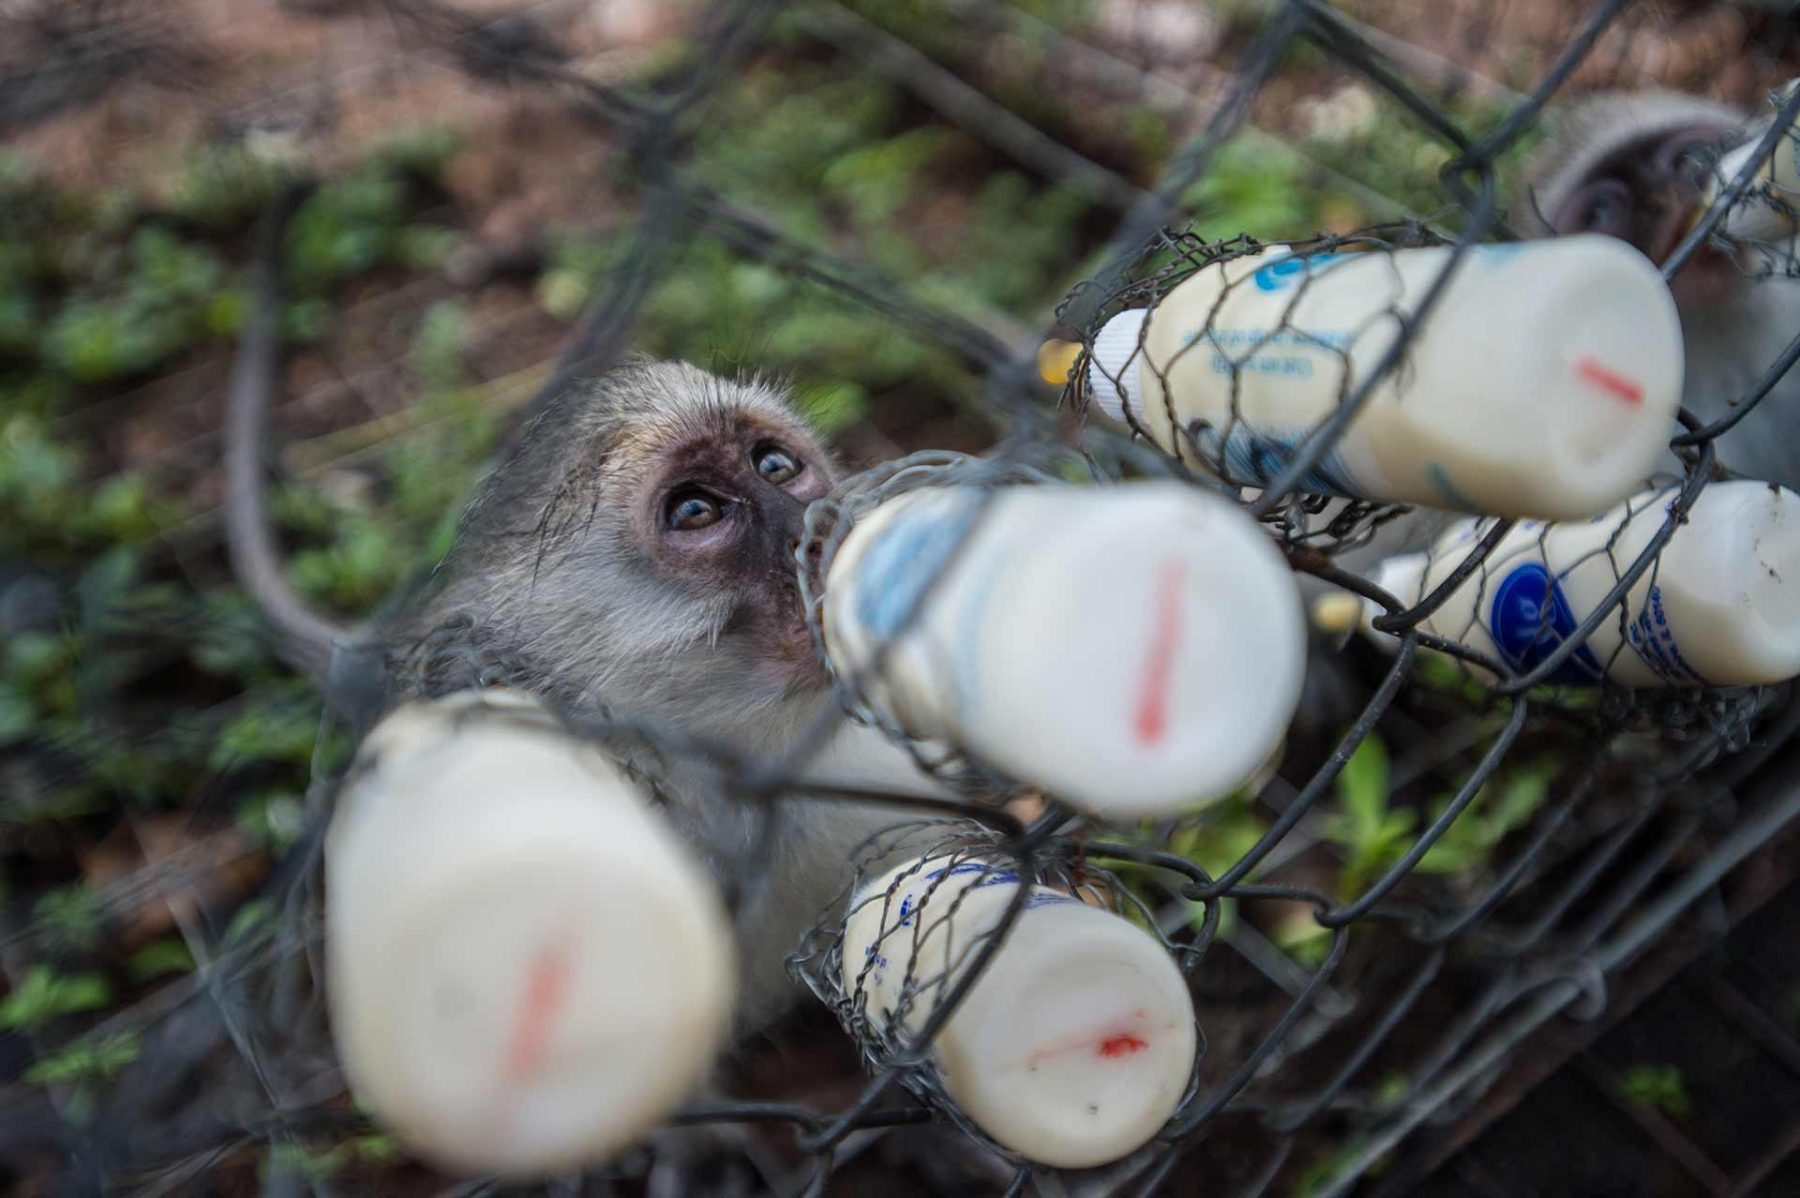 A rescued vervet monkey at the Vervet Monkey Foundation. South Africa.